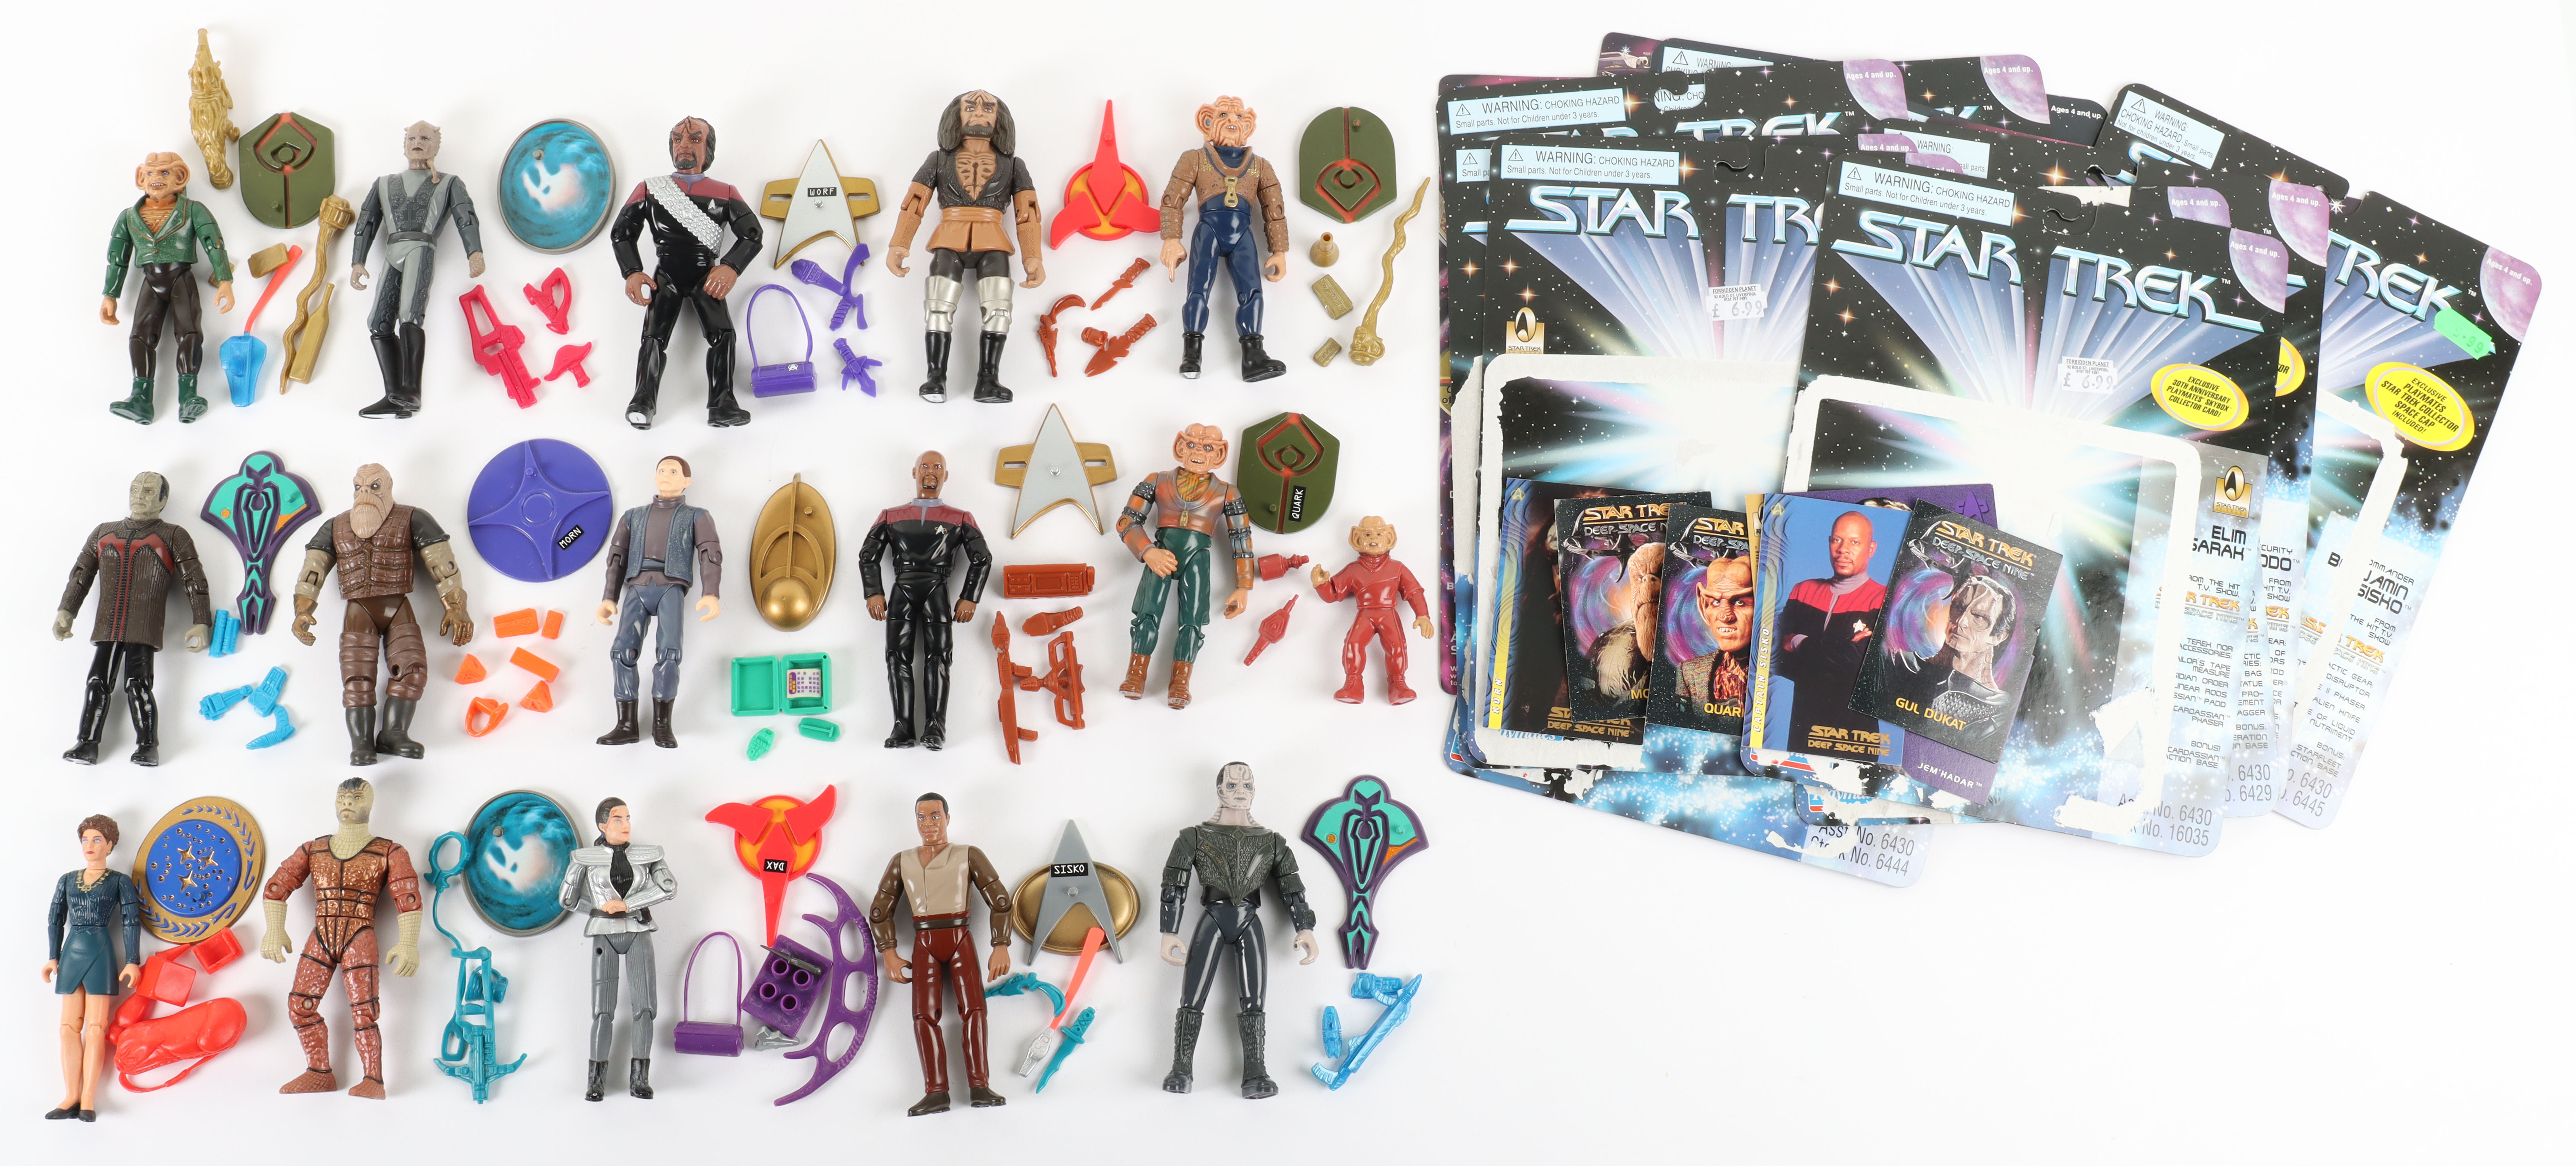 Star Trek Deep Space Nine playmates figures